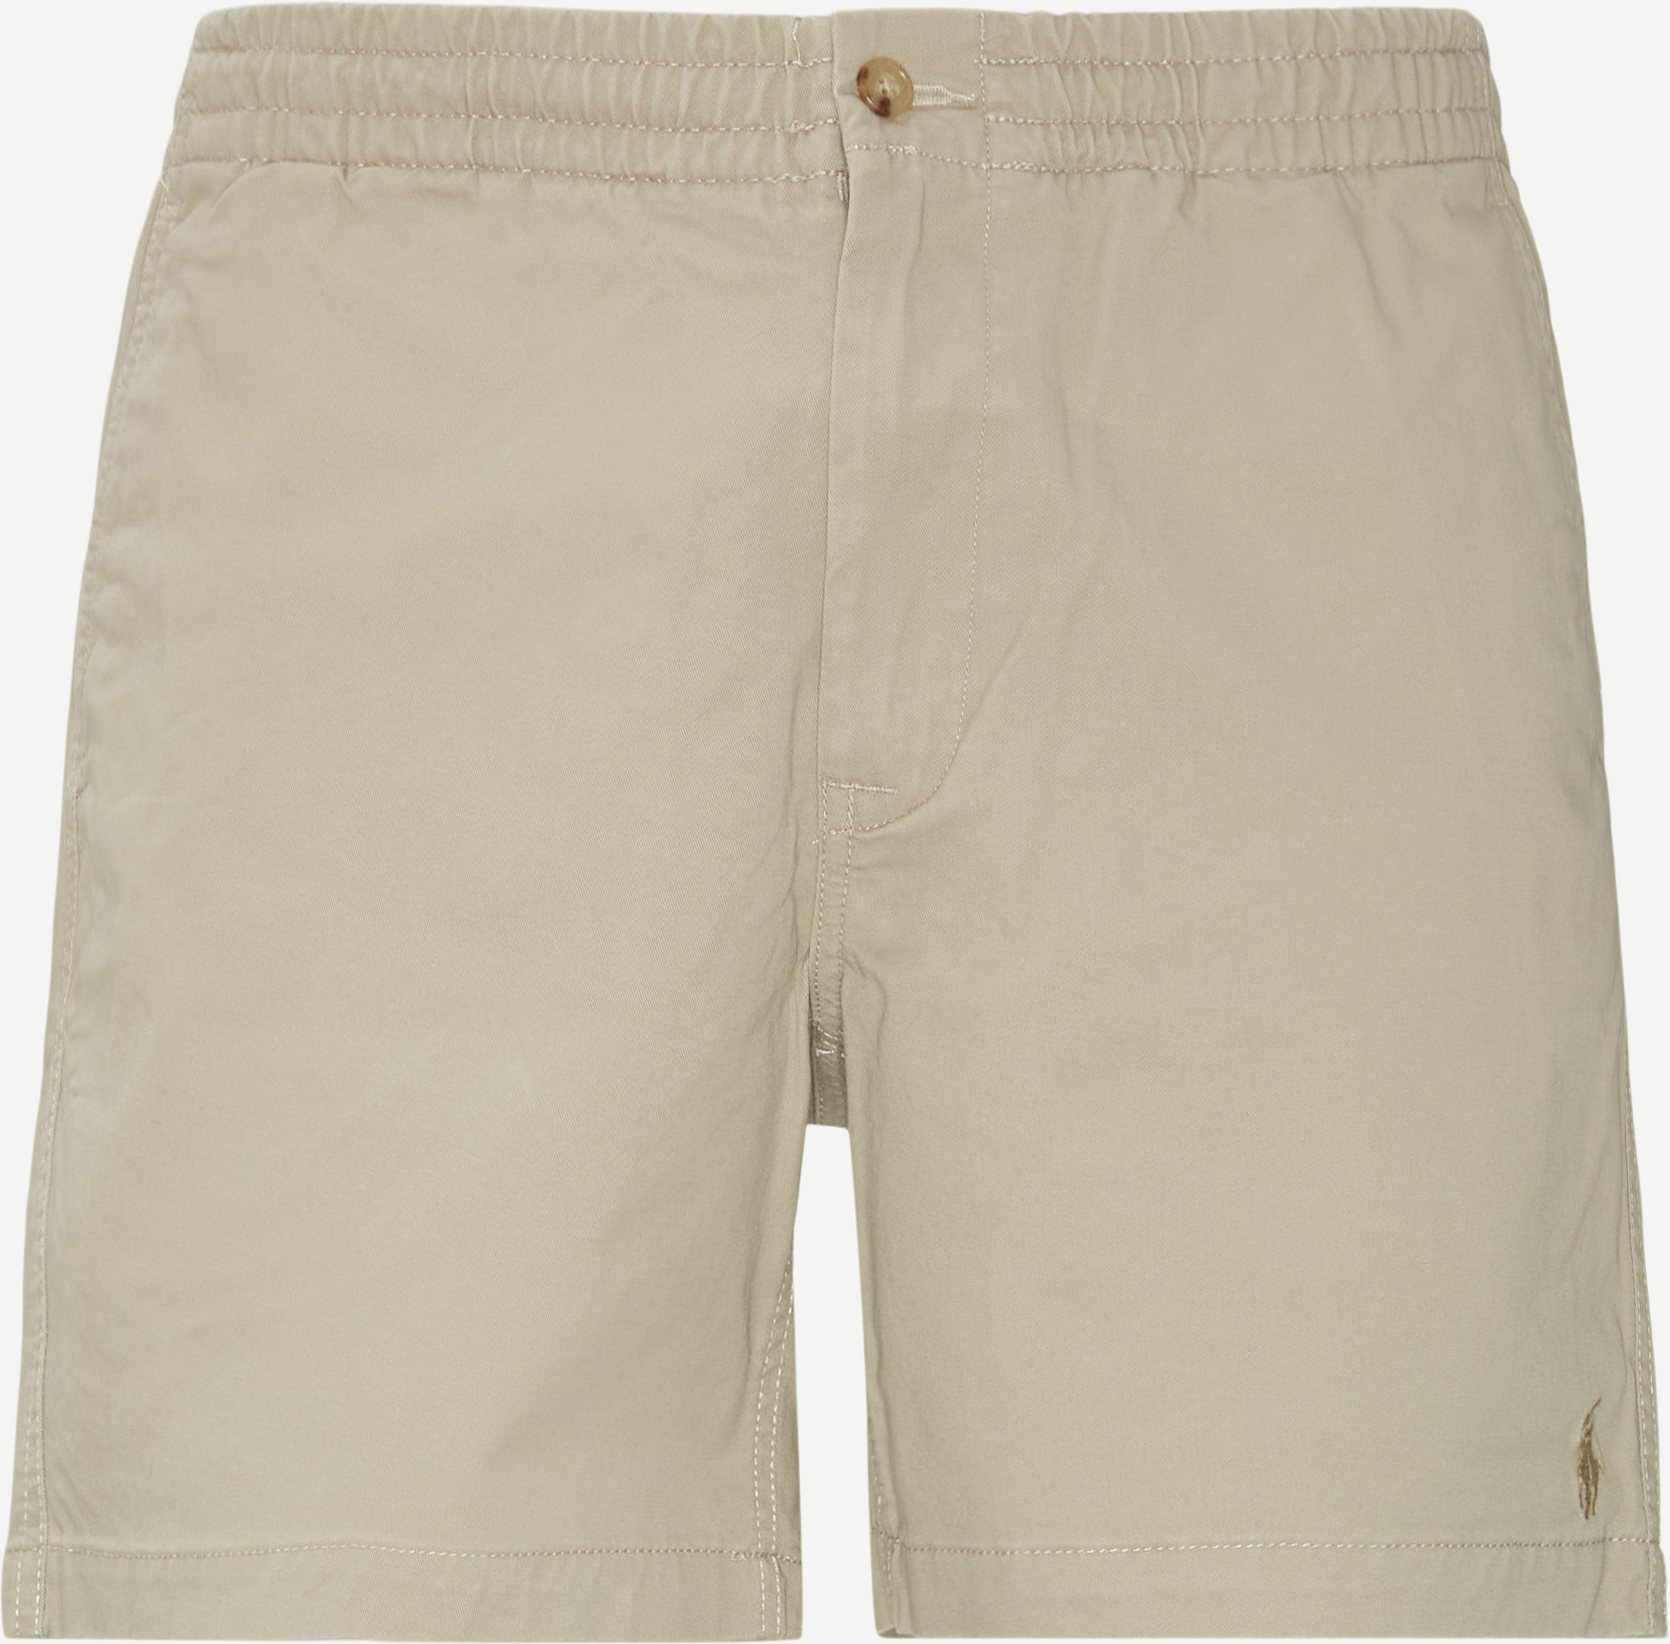 Chino Shorts - Shorts - Classic fit - Sand